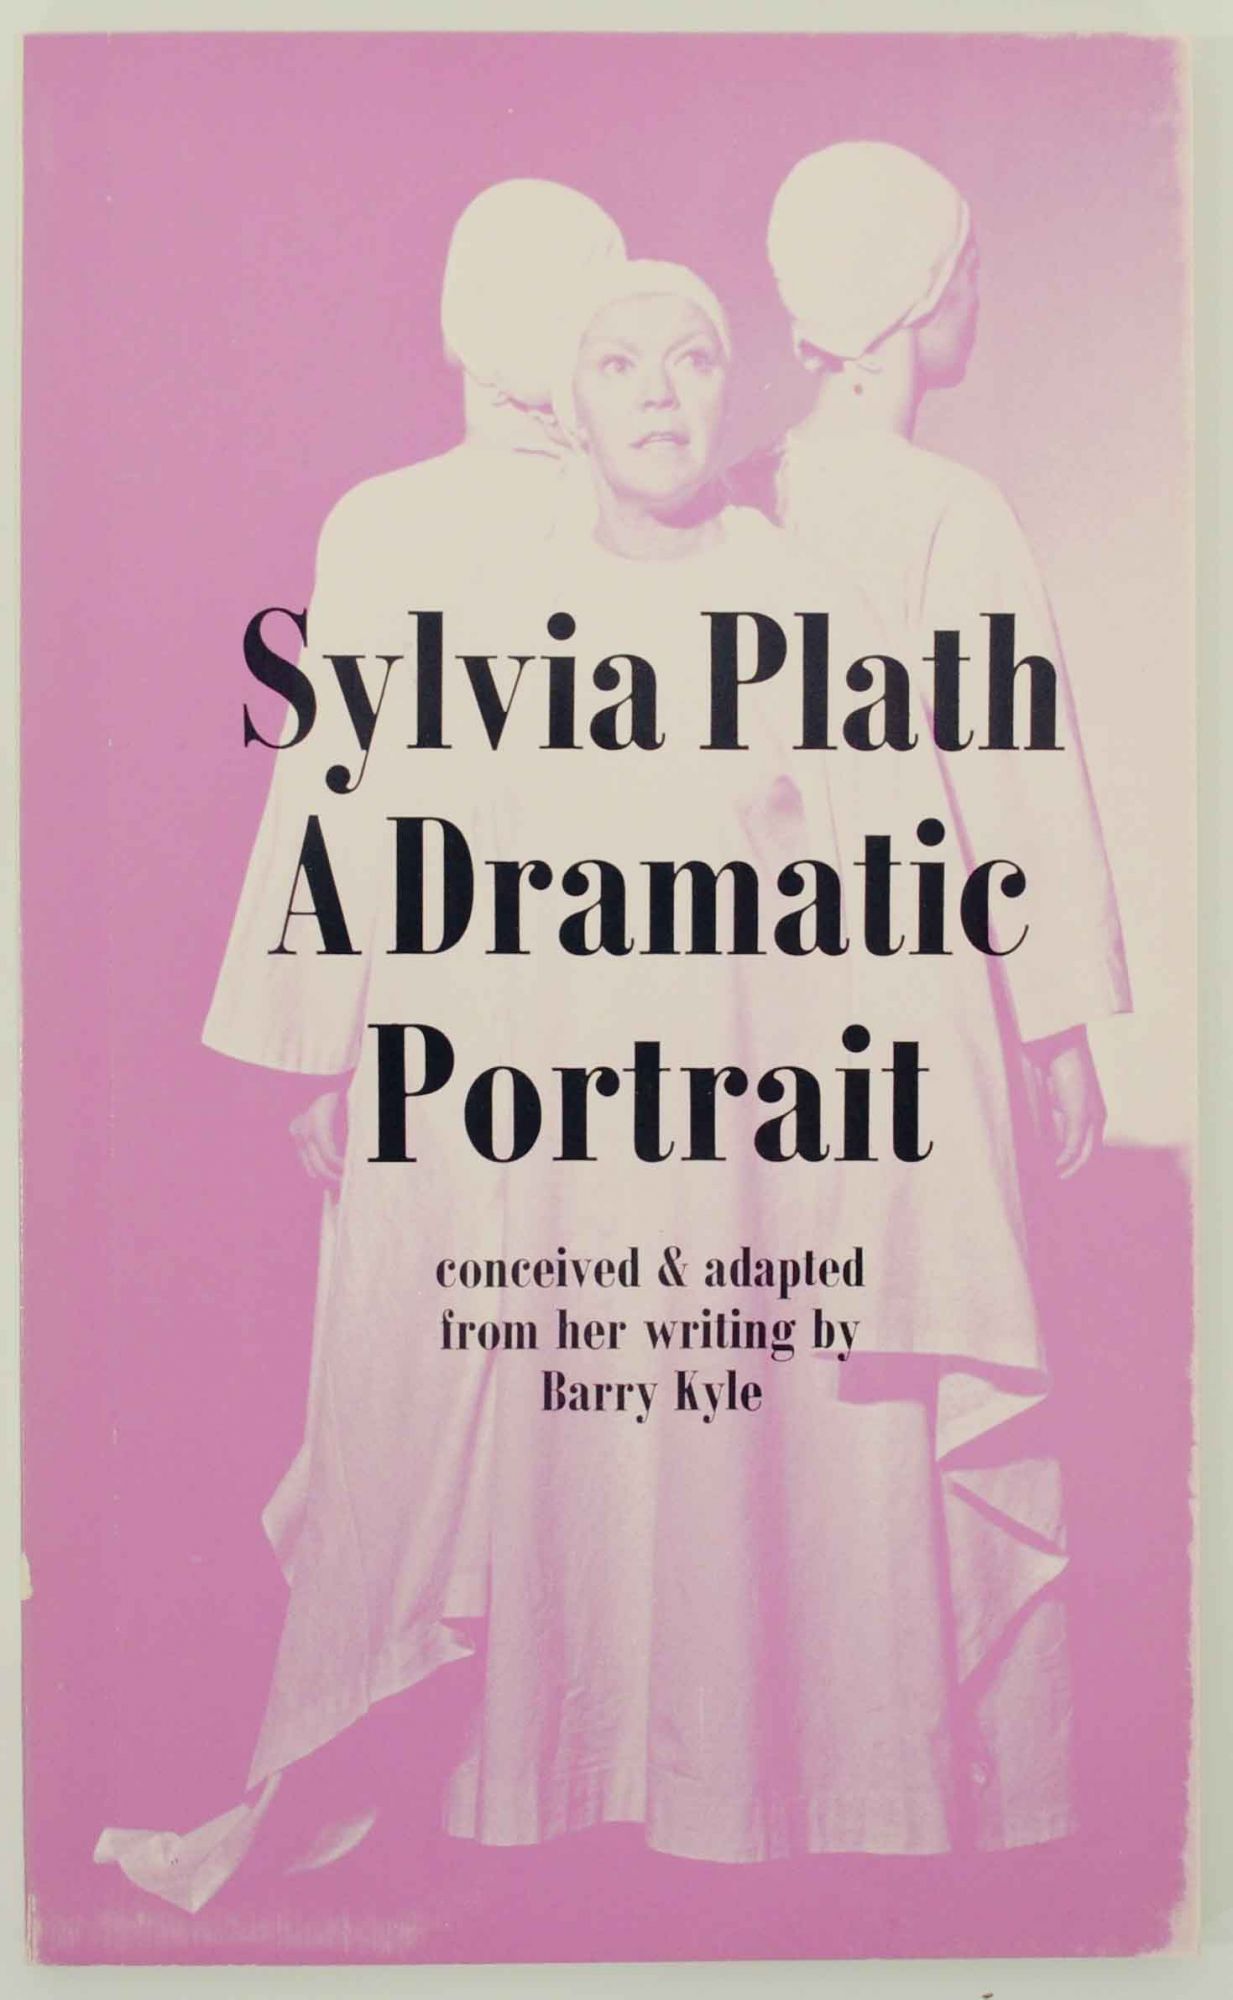 Sylvia Plath: A Dramatic Portrait - KYLE, Barry - Sylvia Plath